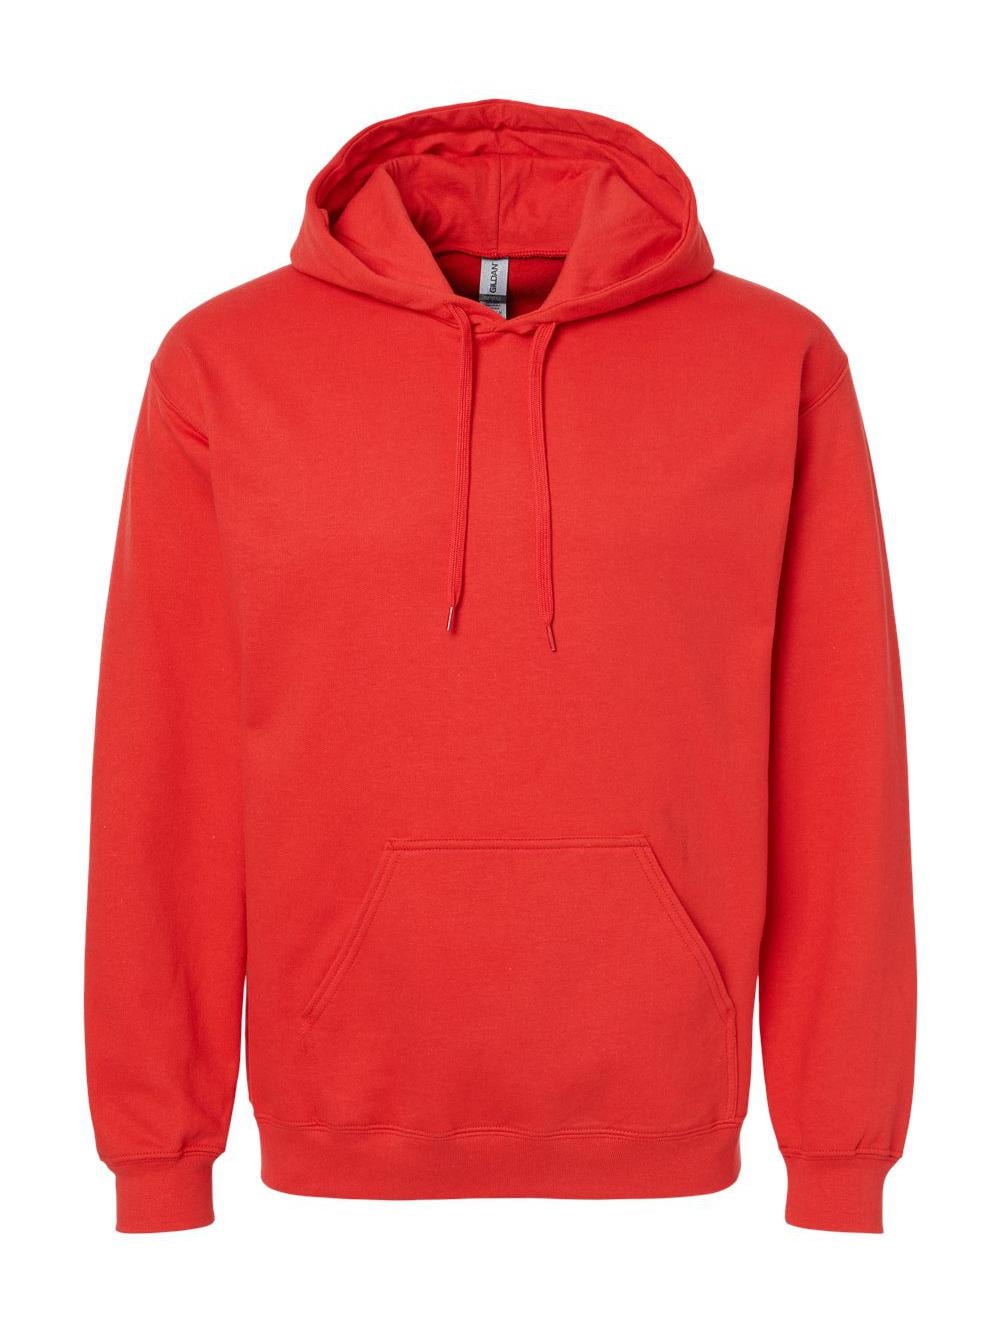 Gildan - Softstyle Hooded Sweatshirt - SF500 - Walmart.com